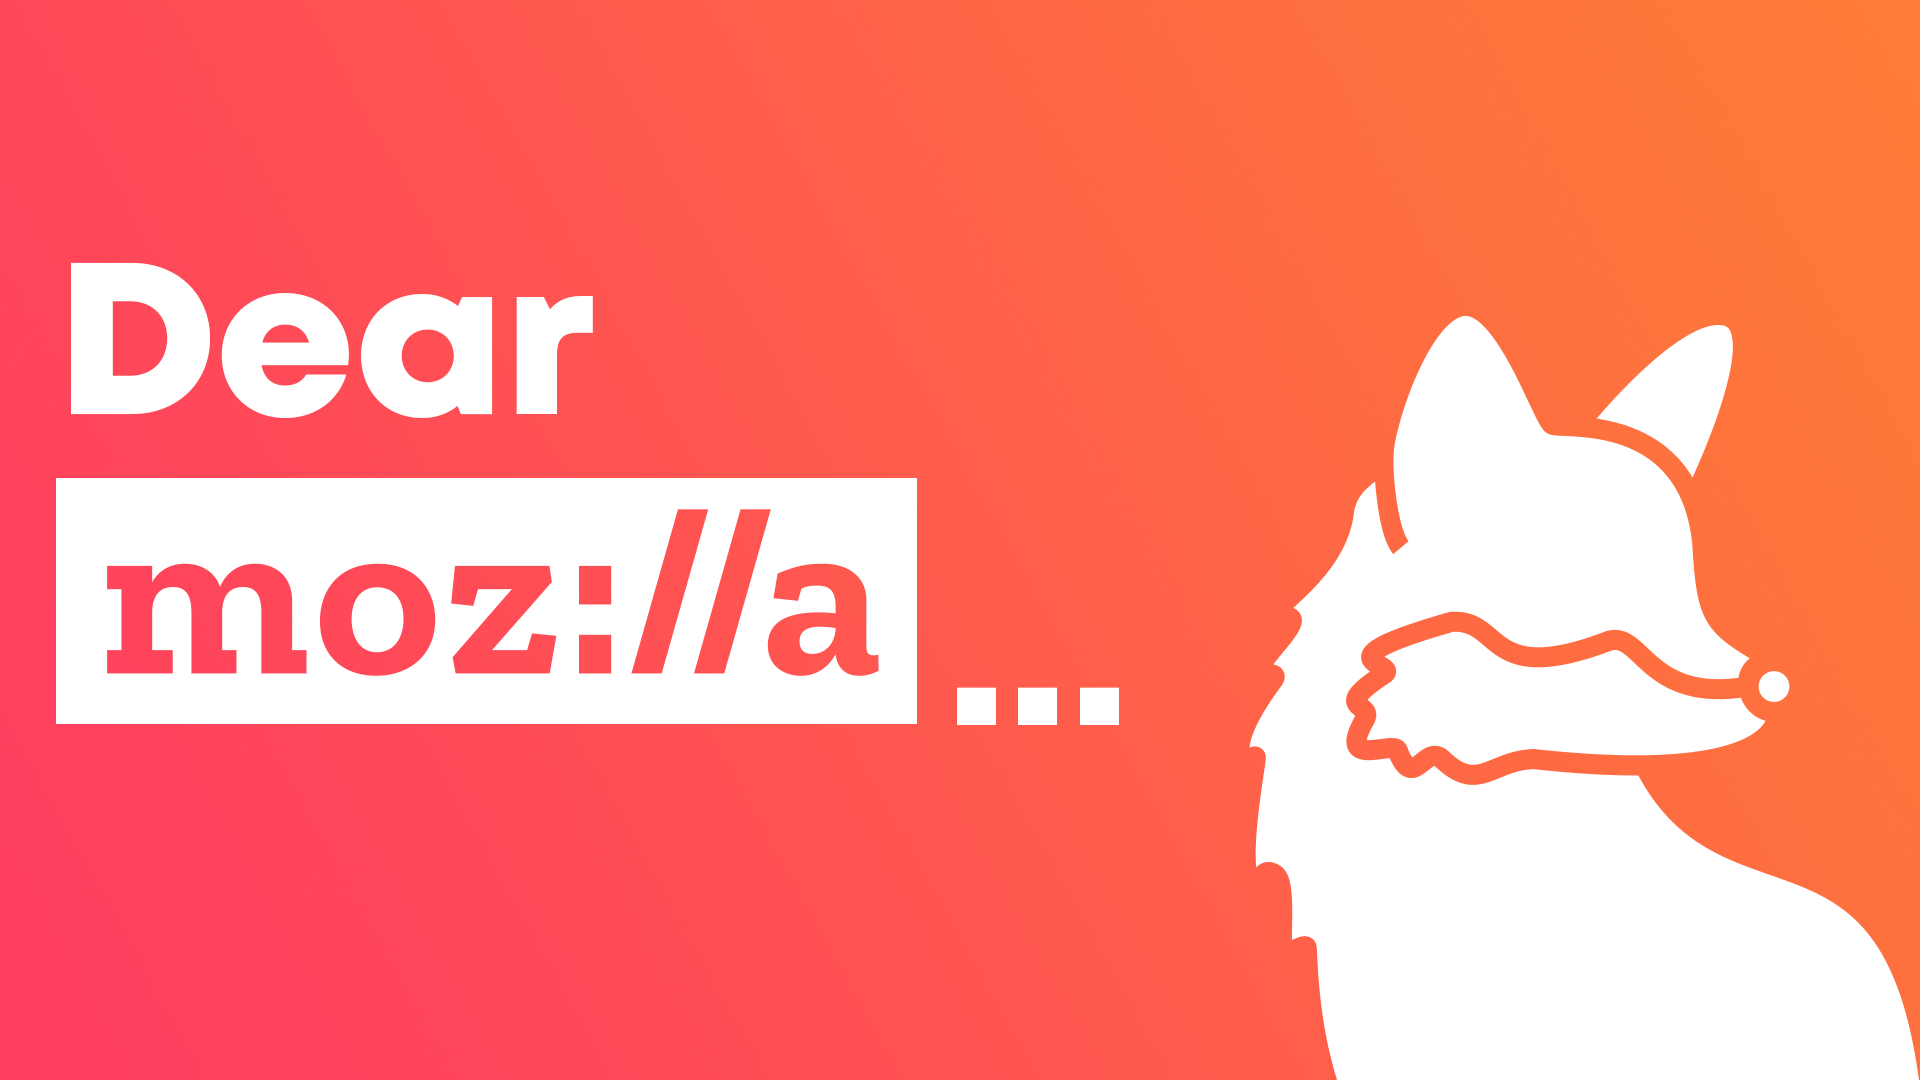 Dear Mozilla...